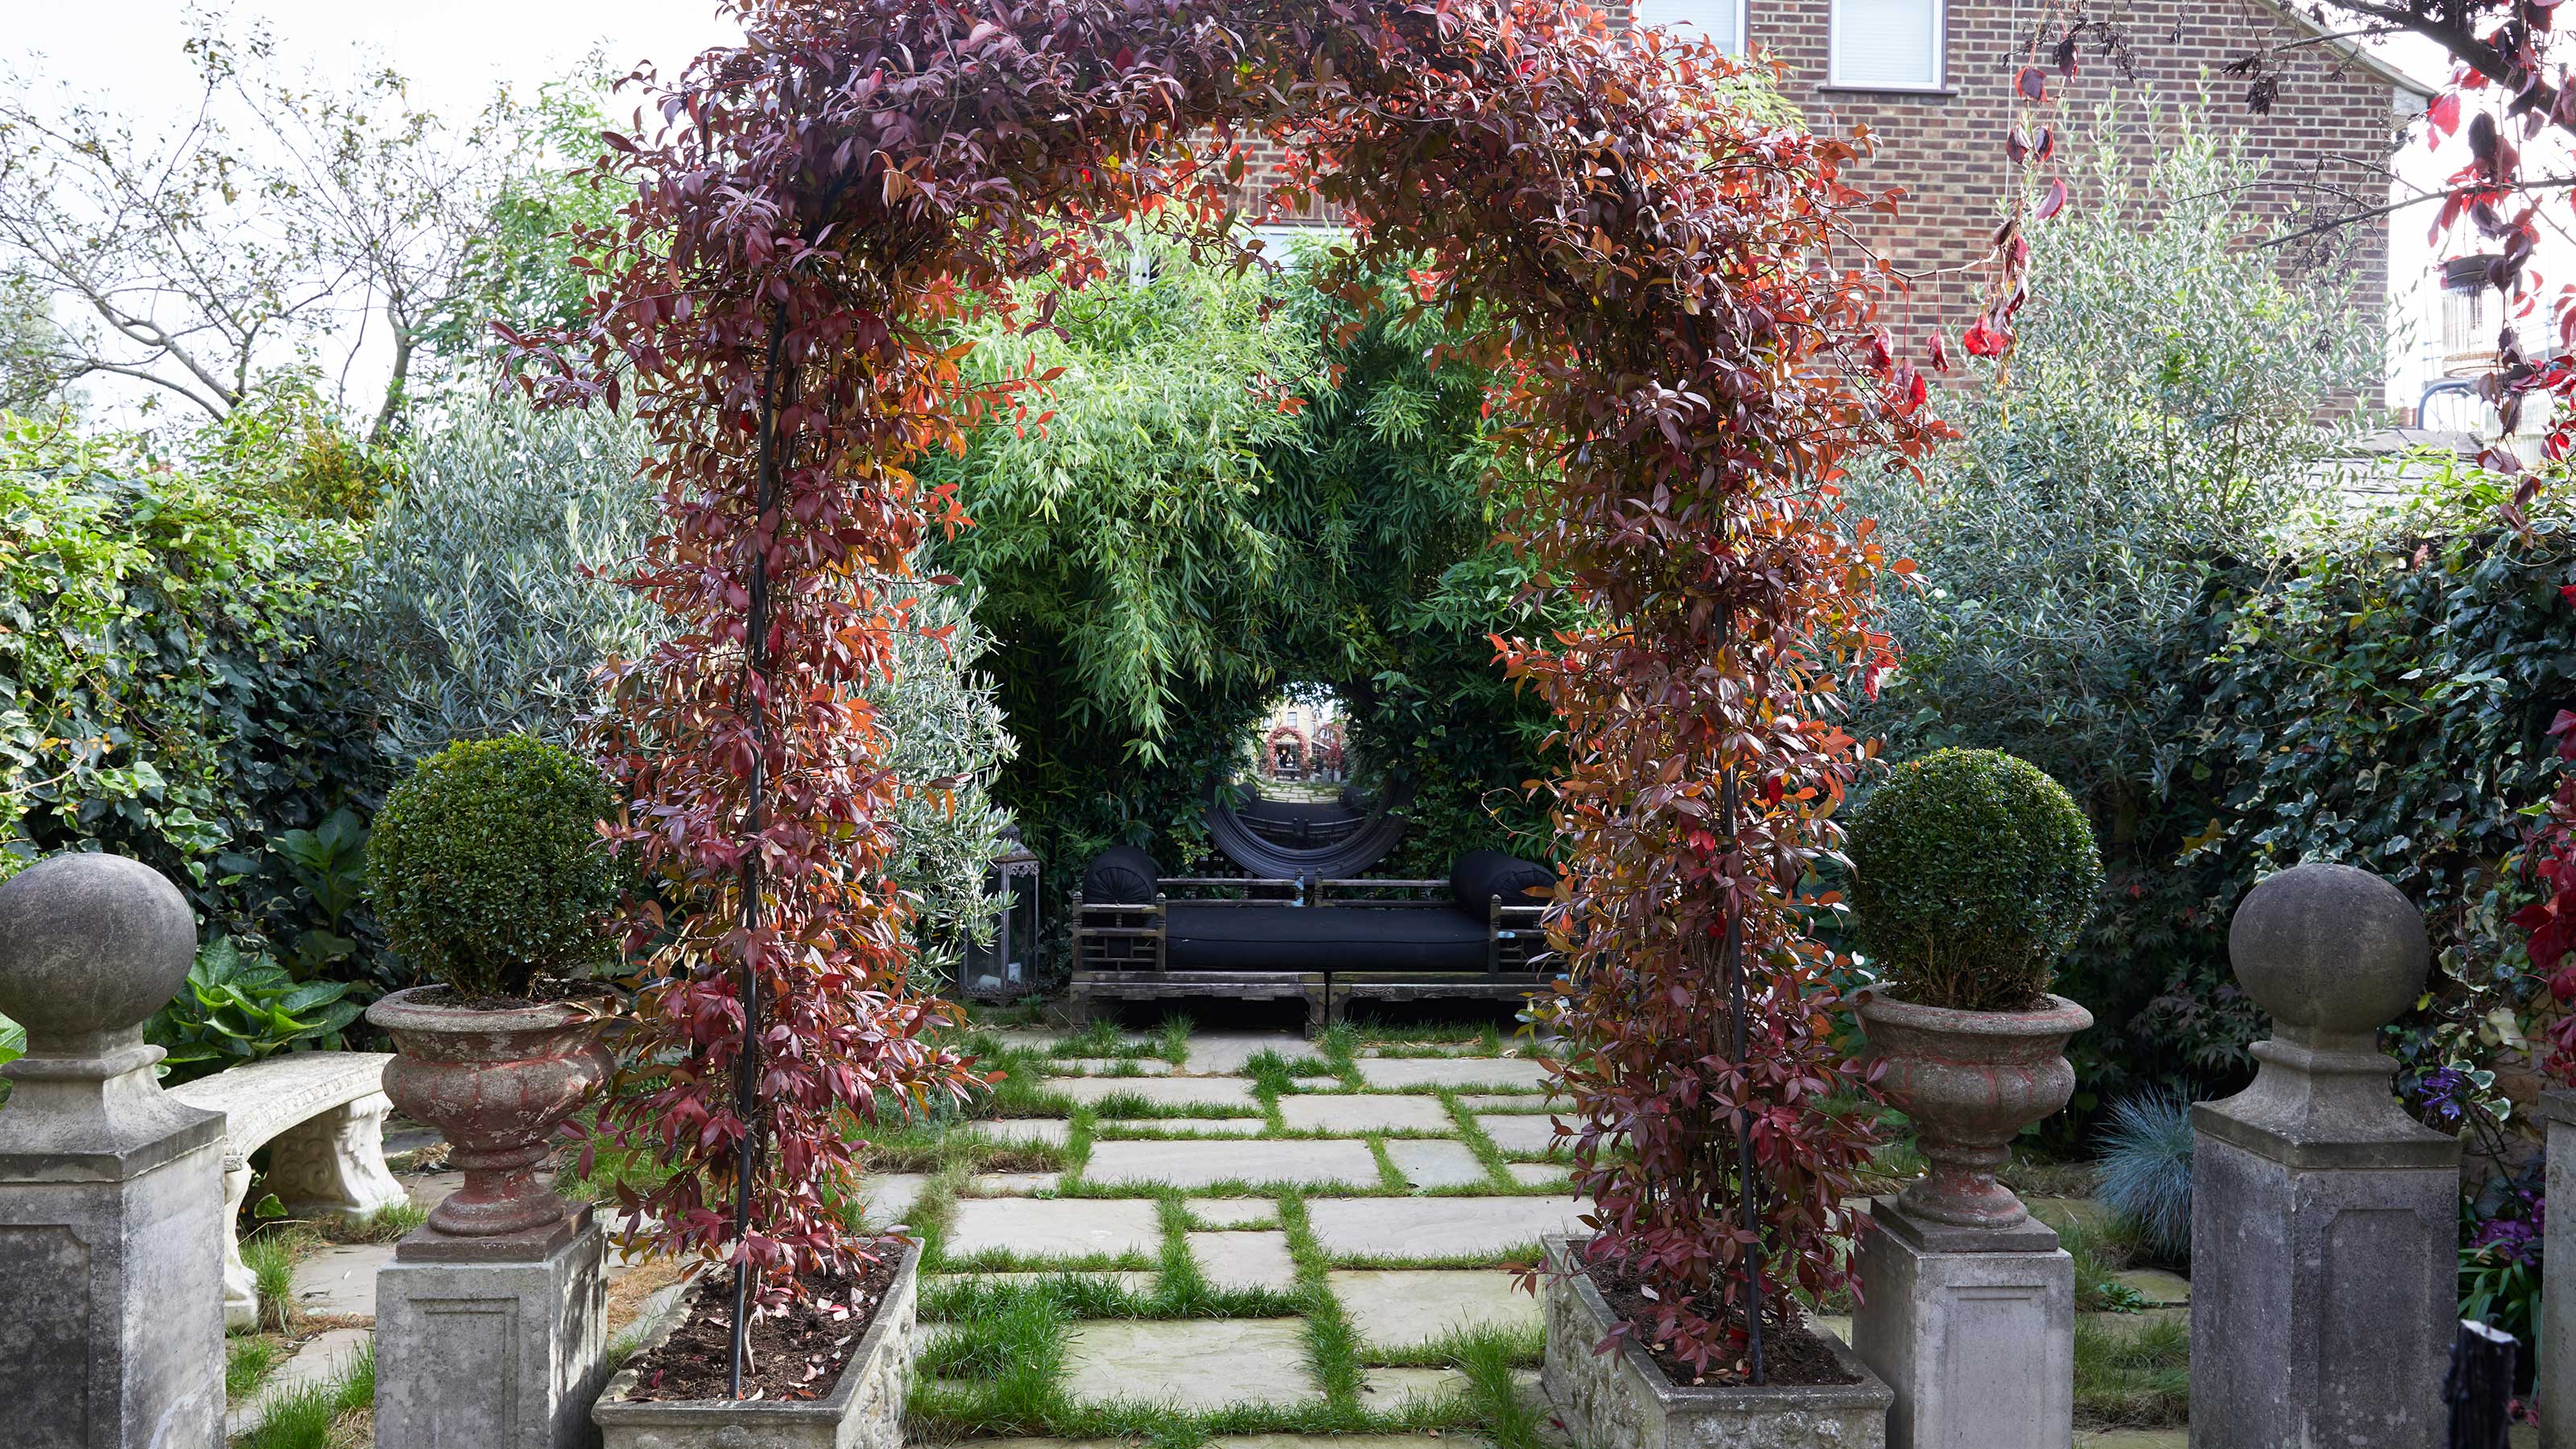 Garden arch ideas: 11 gorgeous archways for your backyard